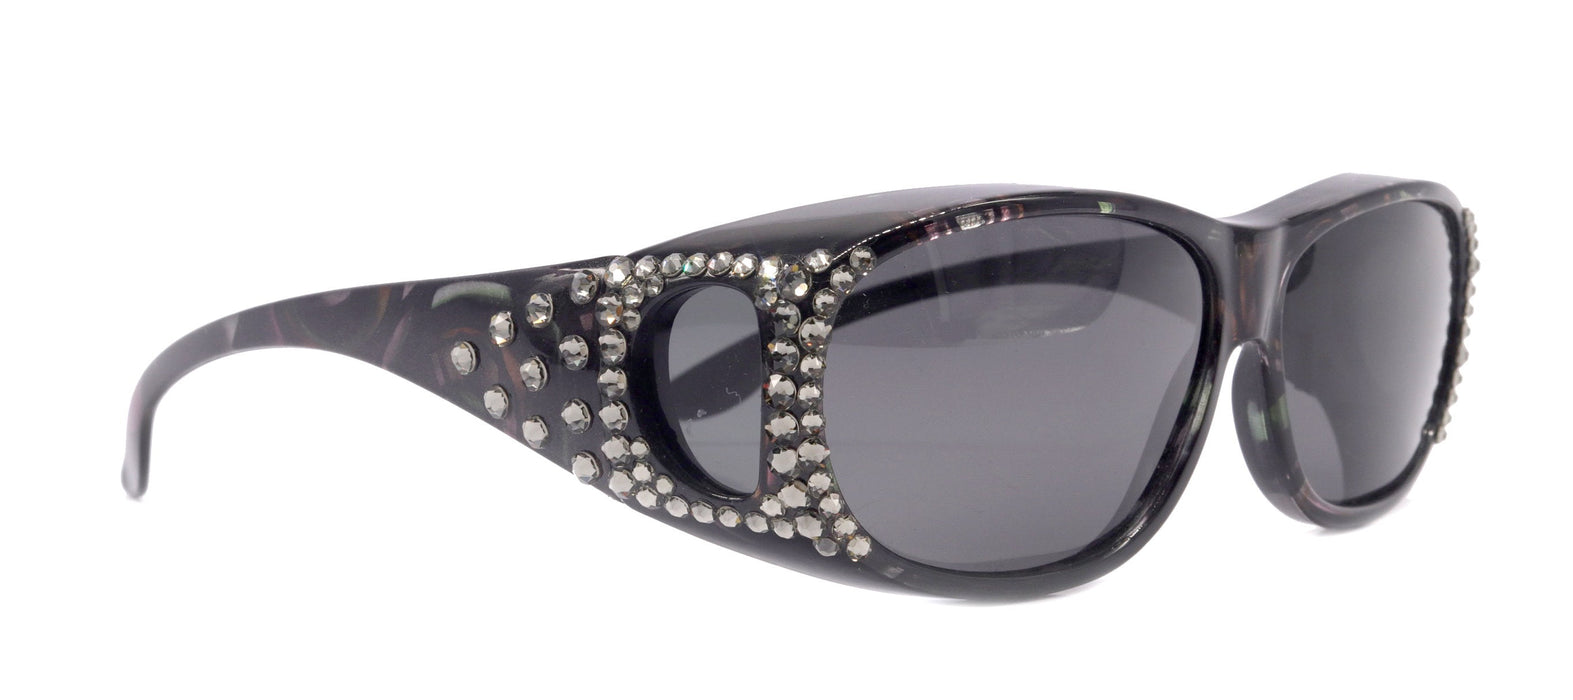 Explorer, (Bling) (Fit Over) Glasses W (Black Diamond) Genuine European Crystals, Polarized Sunglasses 1.1mm (Smoke Grey) NY Fifth Avenue